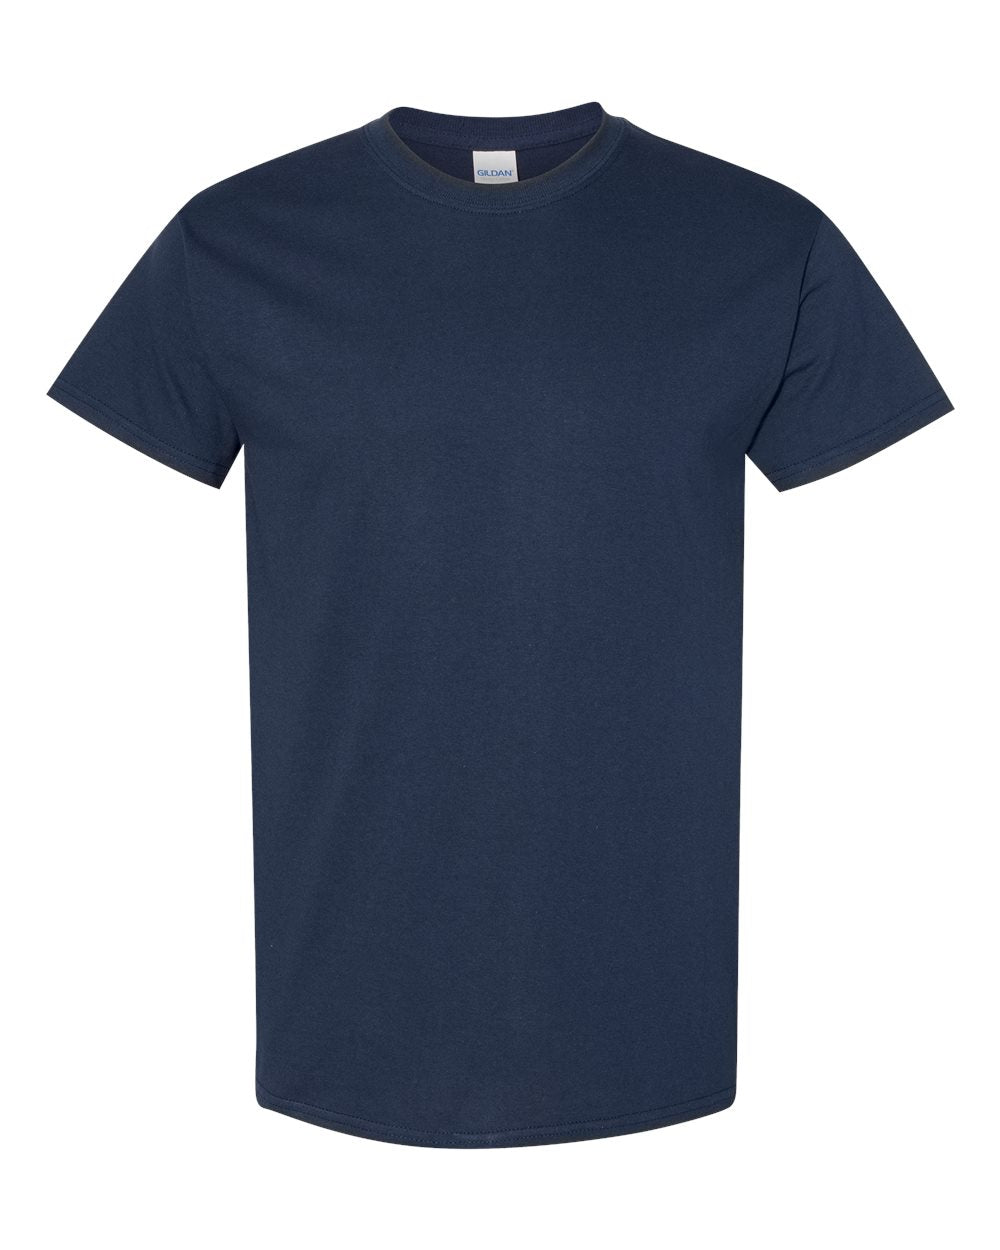 Custom Printed Unisex T-Shirt